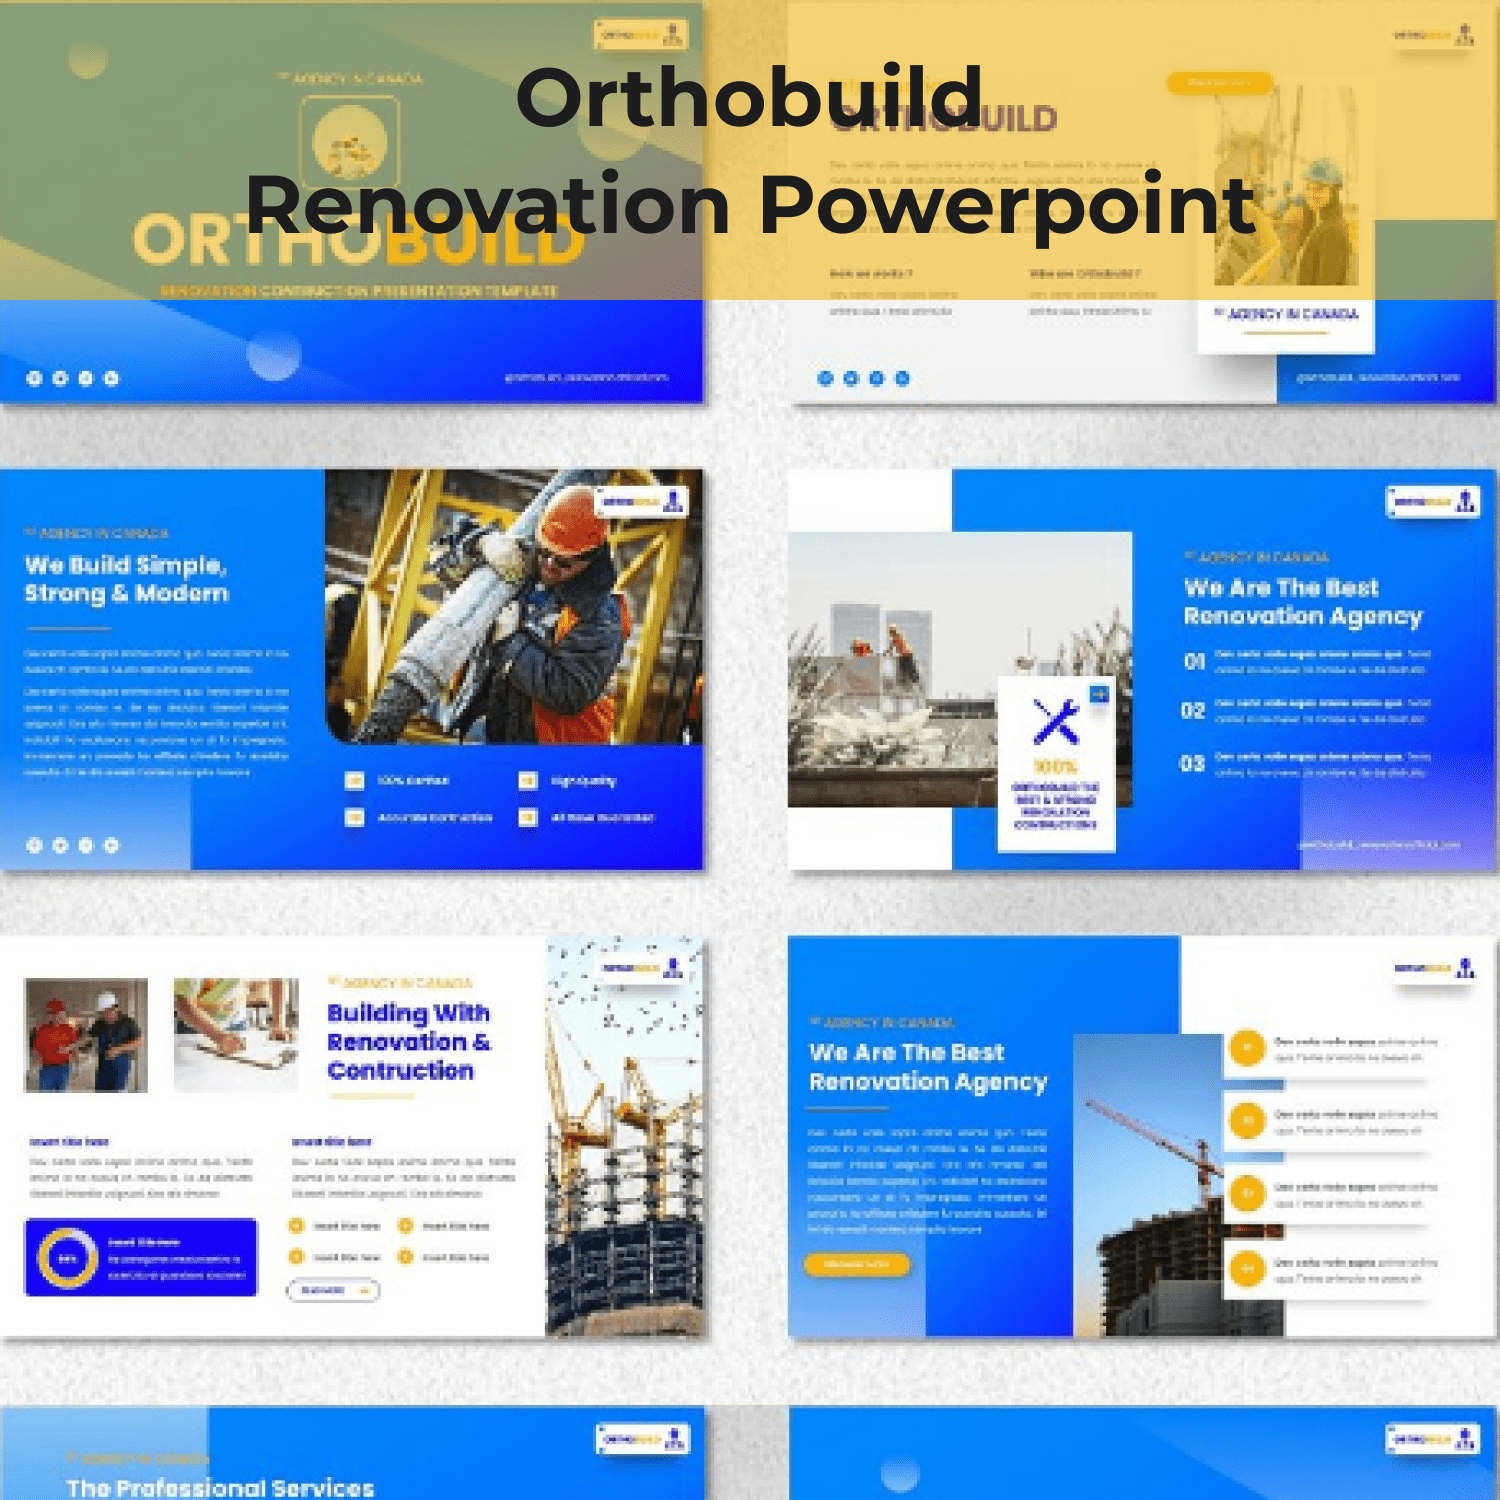 Orthobuild - Renovation Powerpoint by MasterBundles Collage Image.